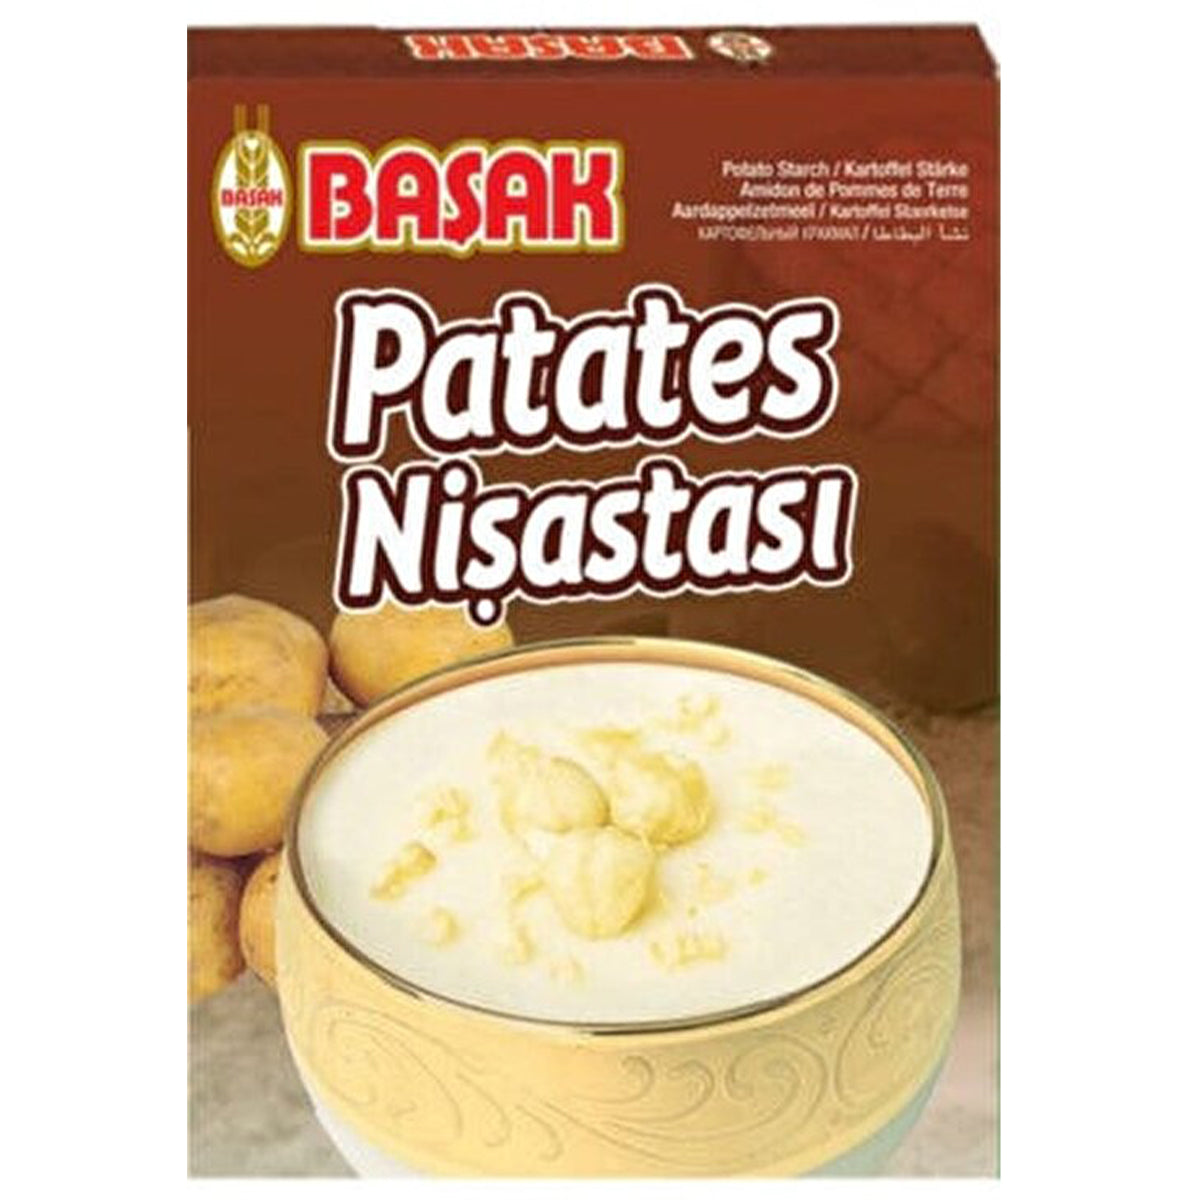 Basak - Potato Starch - 300g - Continental Food Store